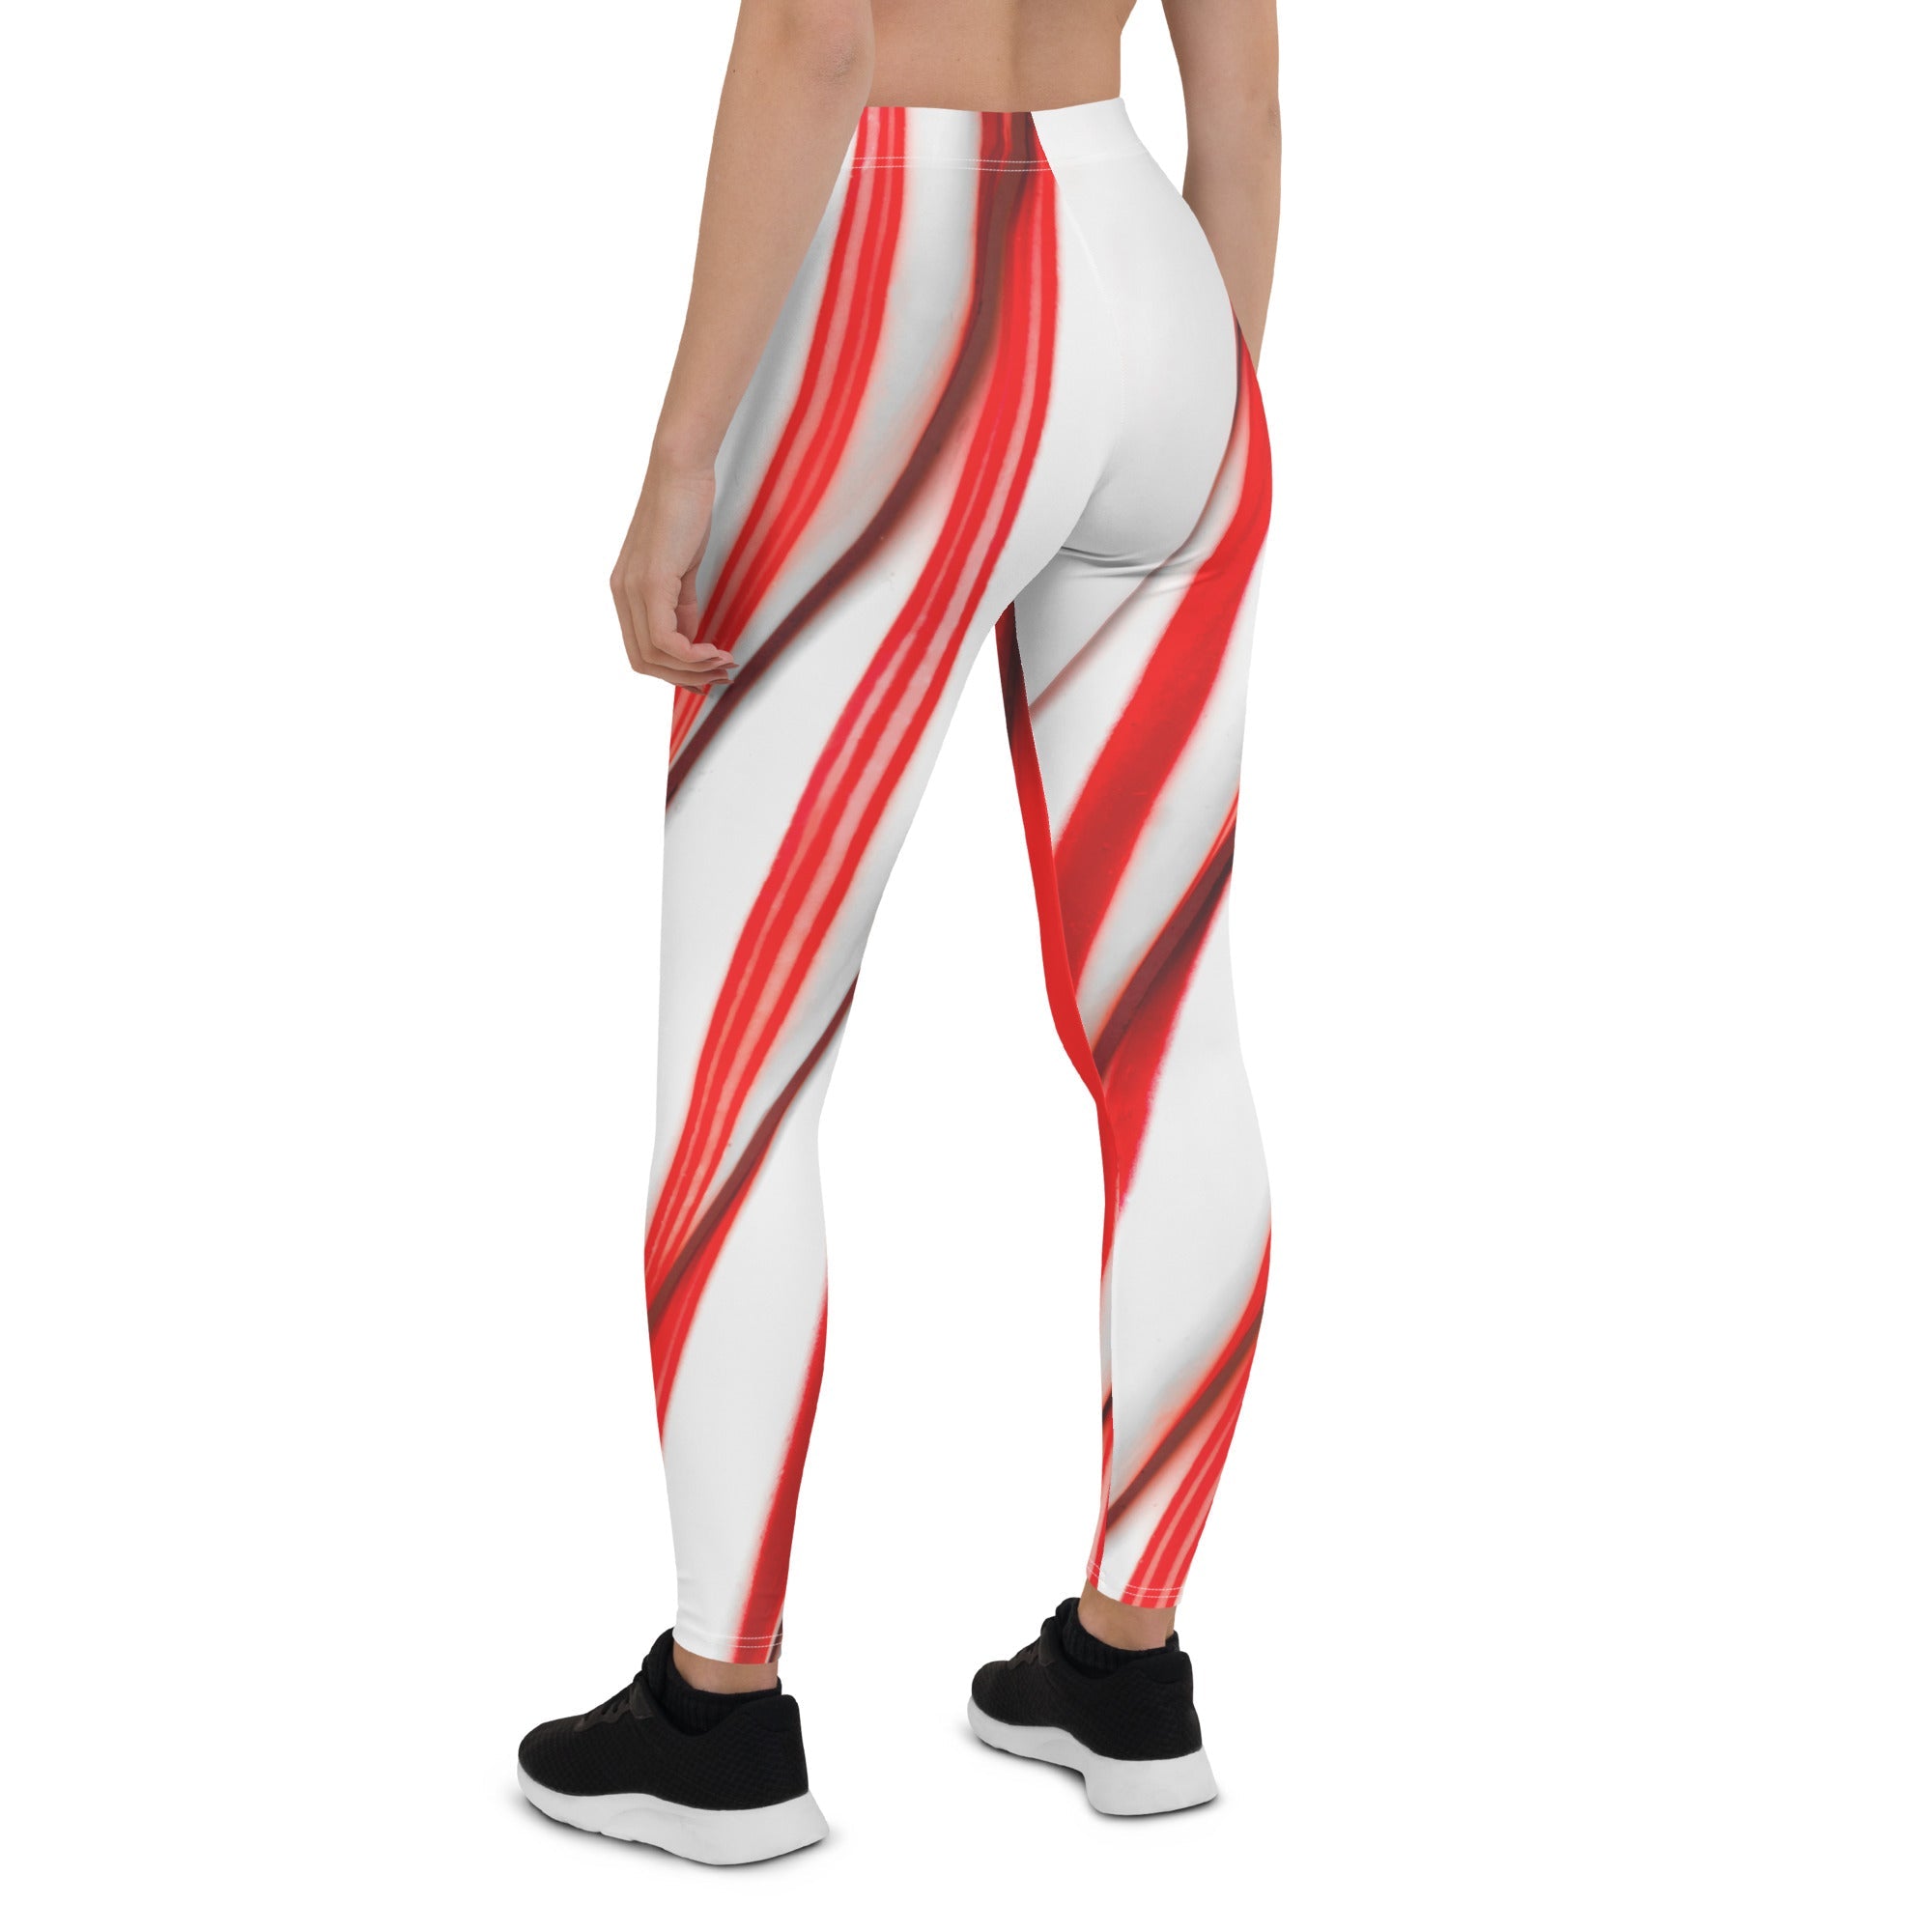 Candy Stripe Christmas Yoga Leggings: Women's Christmas Outfits